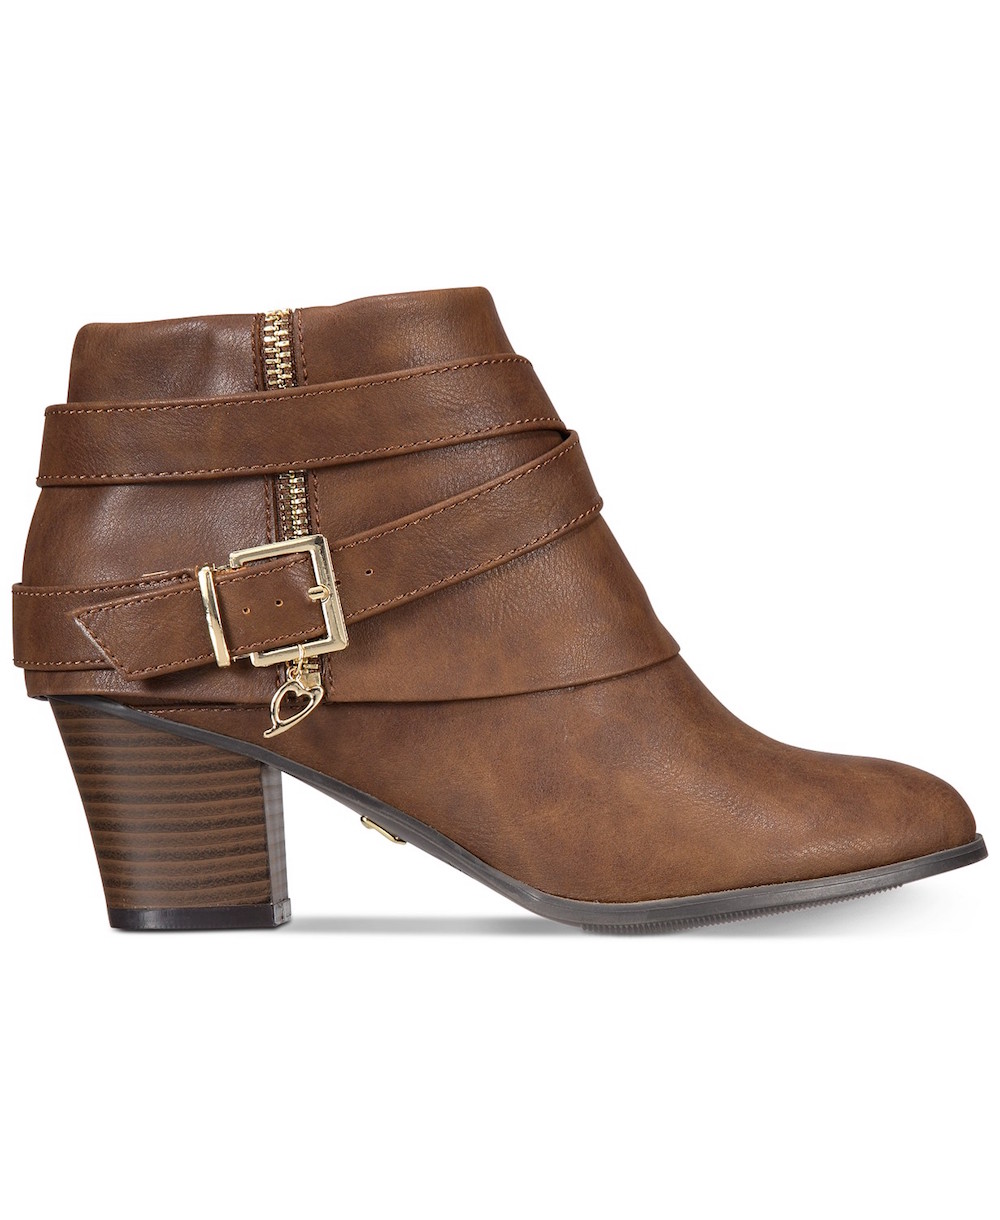 Thalia Sodi Womens Tully Round Toe Ankle Fashion Boots, Brown, Size 7.5 ...